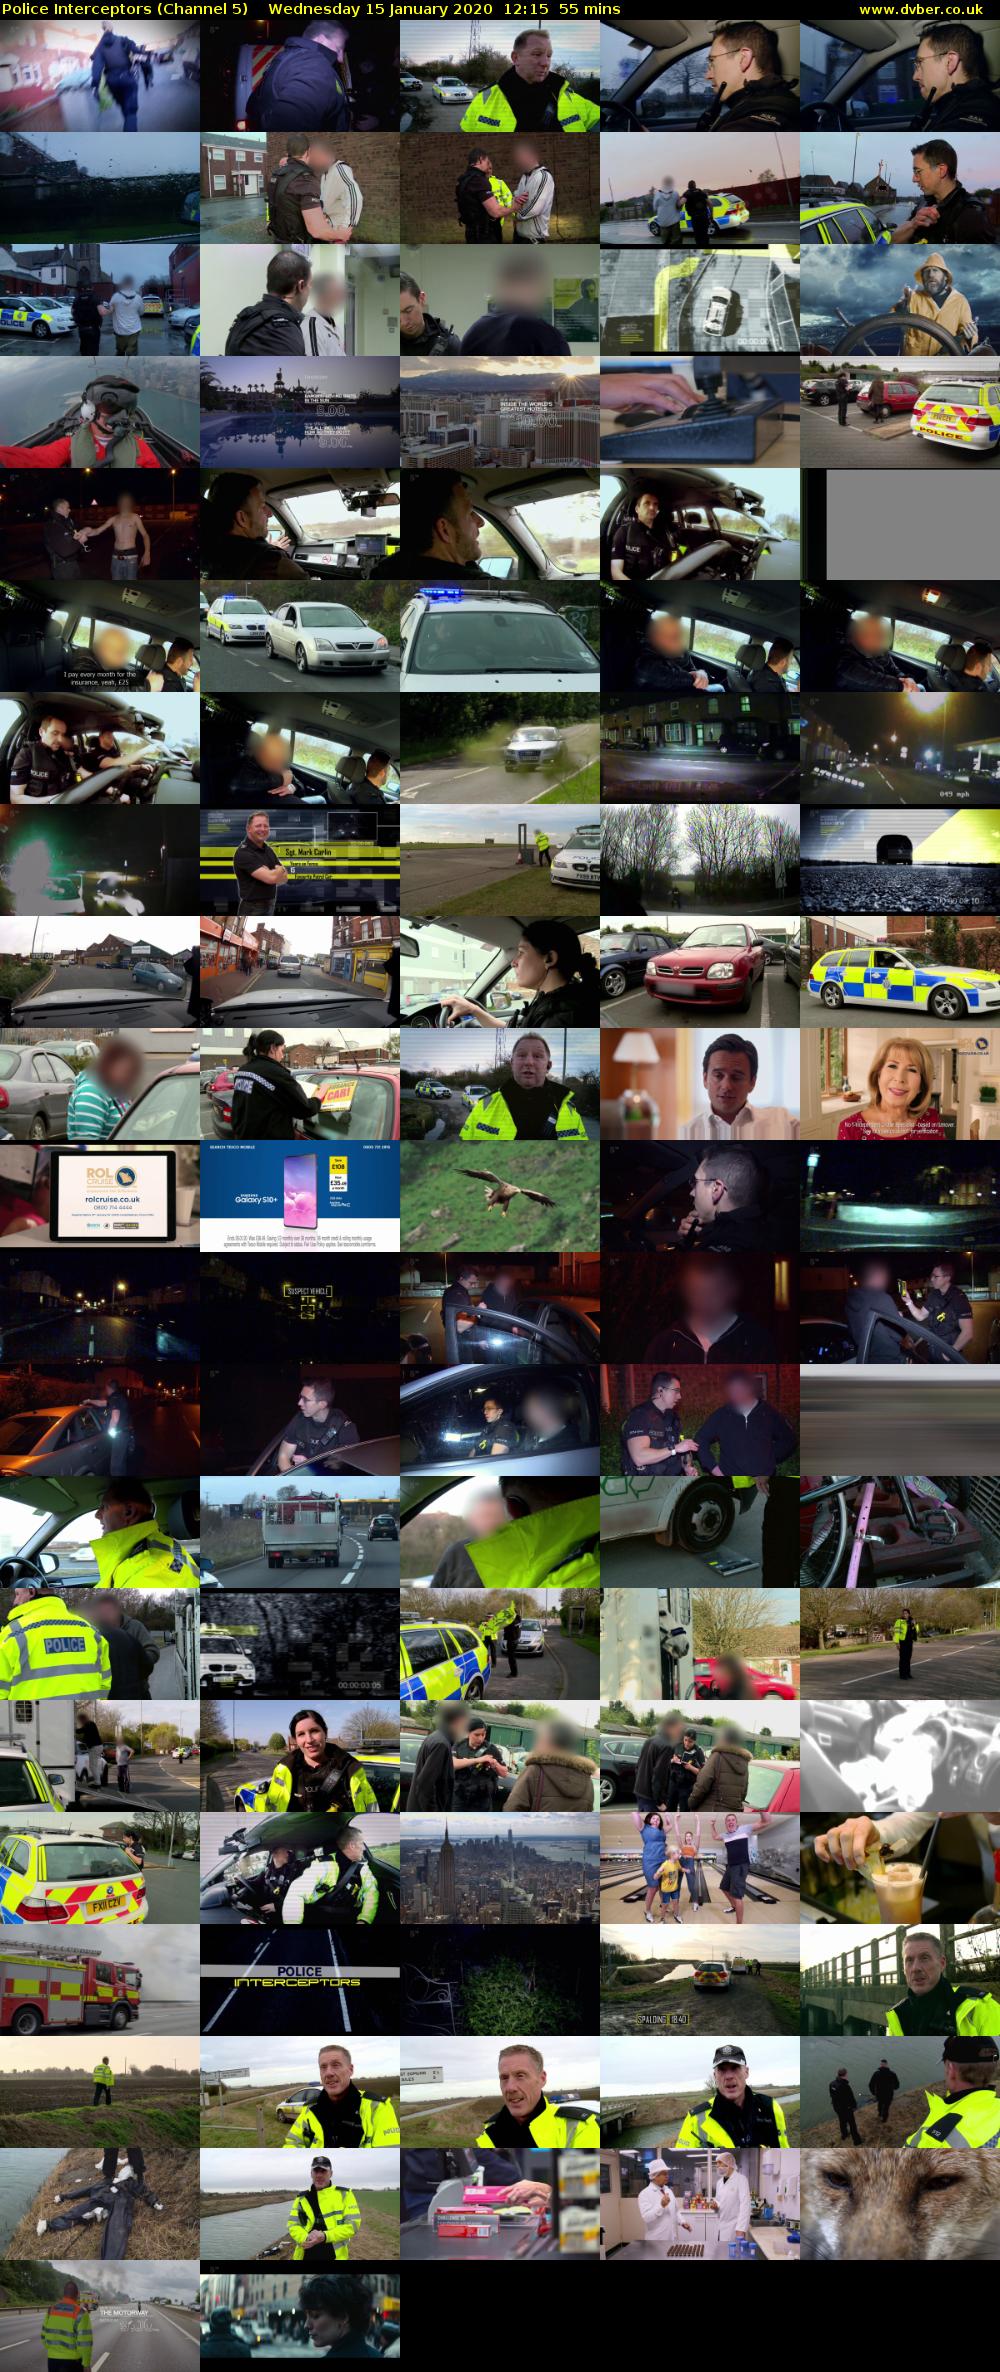 Police Interceptors (Channel 5) Wednesday 15 January 2020 12:15 - 13:10